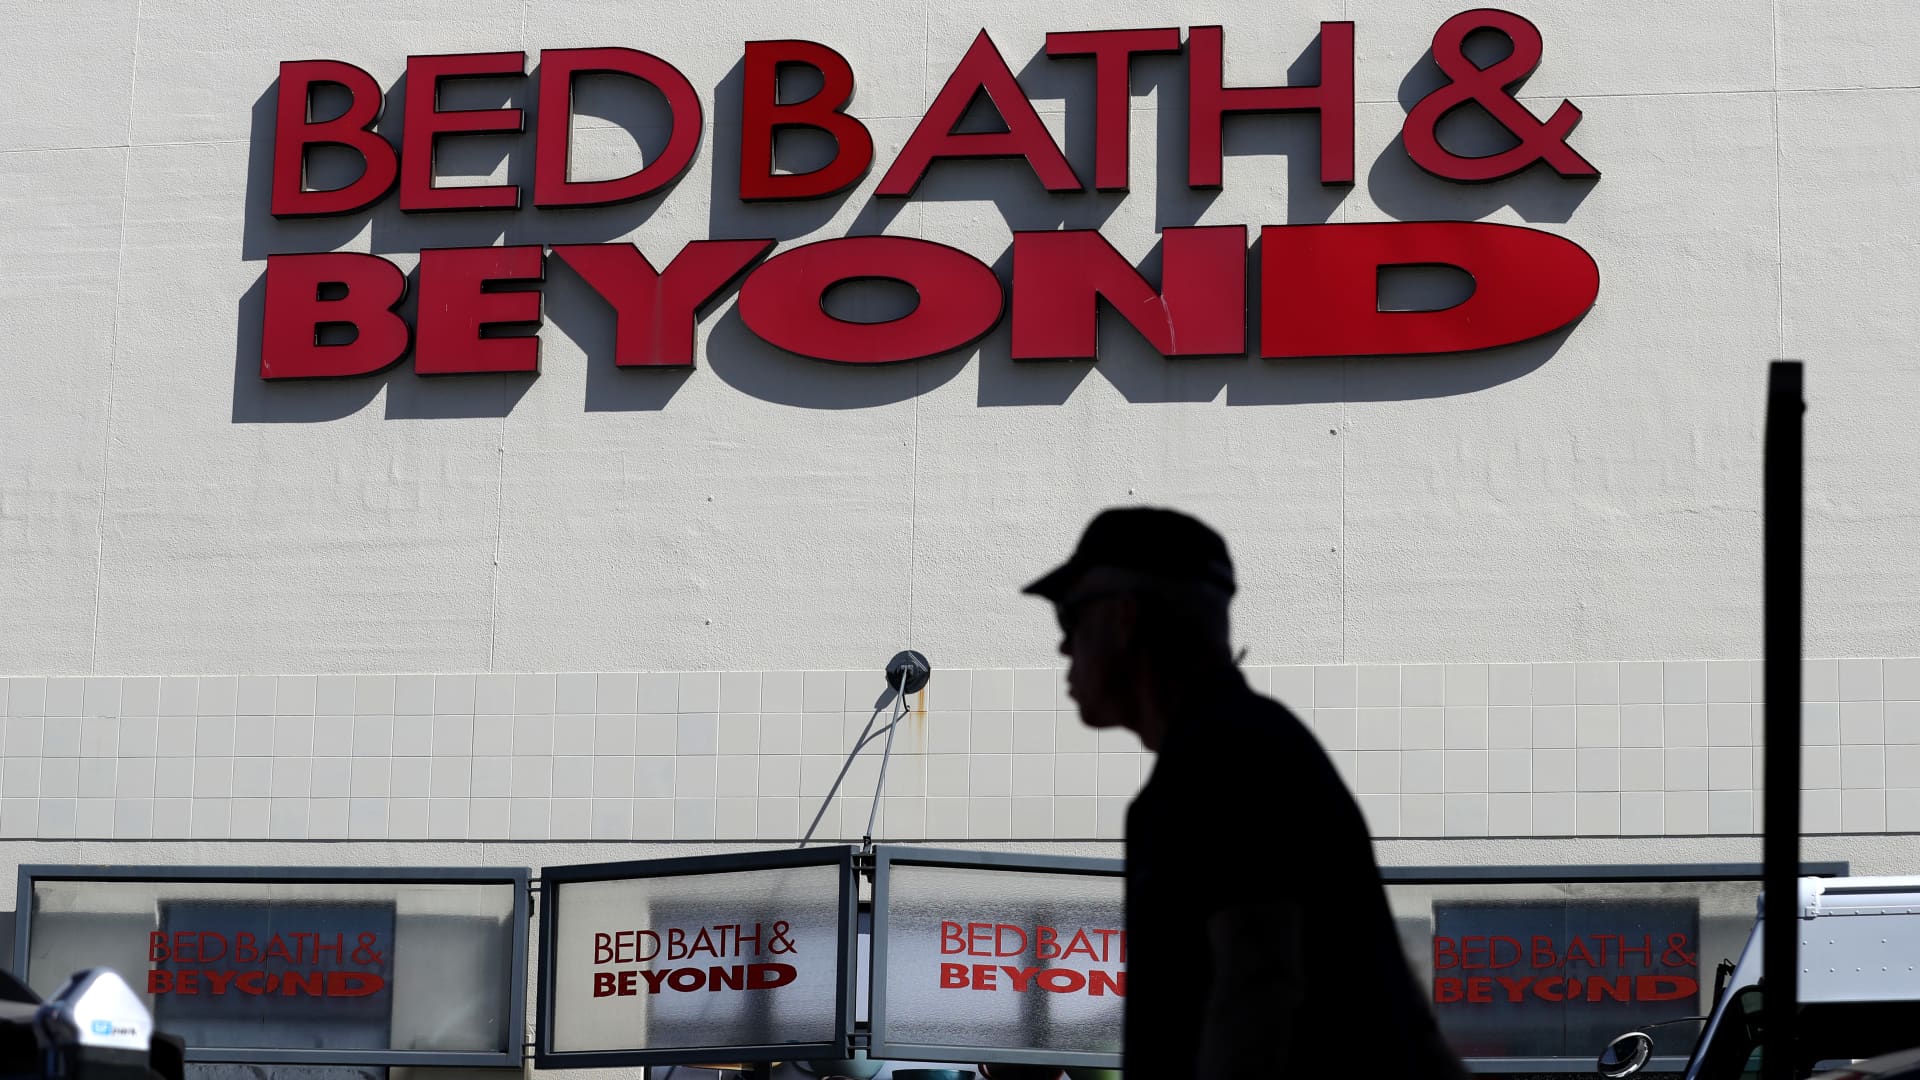 Bed Bath & Beyond shares decline after CFO’s suicide